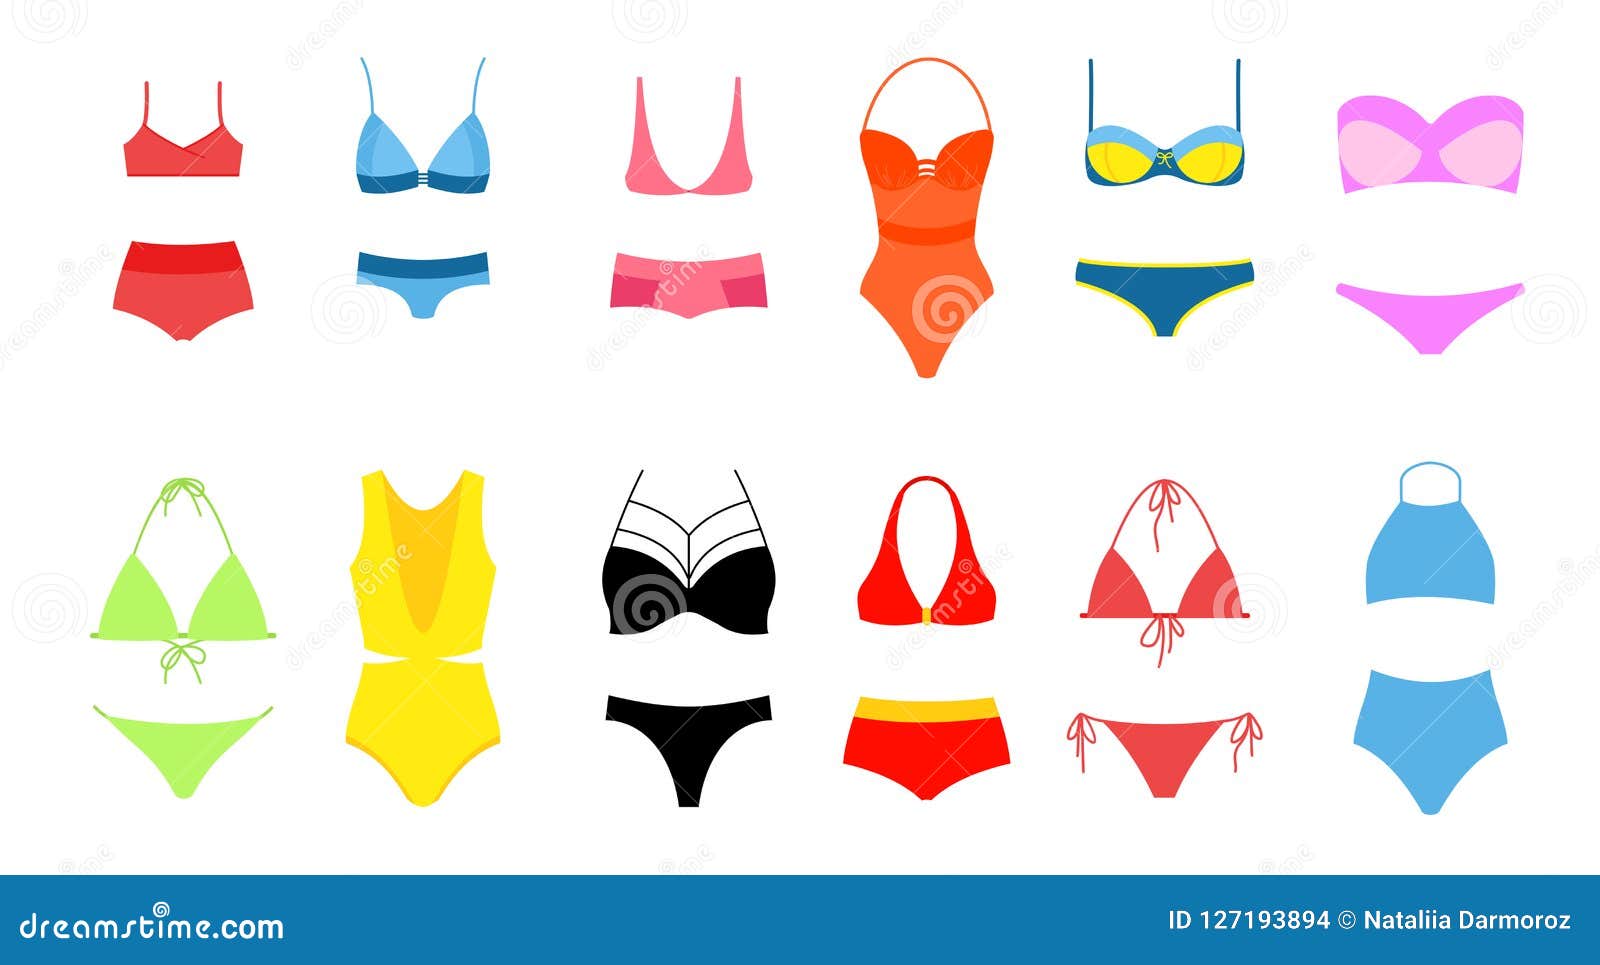 Vector Illustration of Women S Bikini Set, Collection of Bright Colors ...